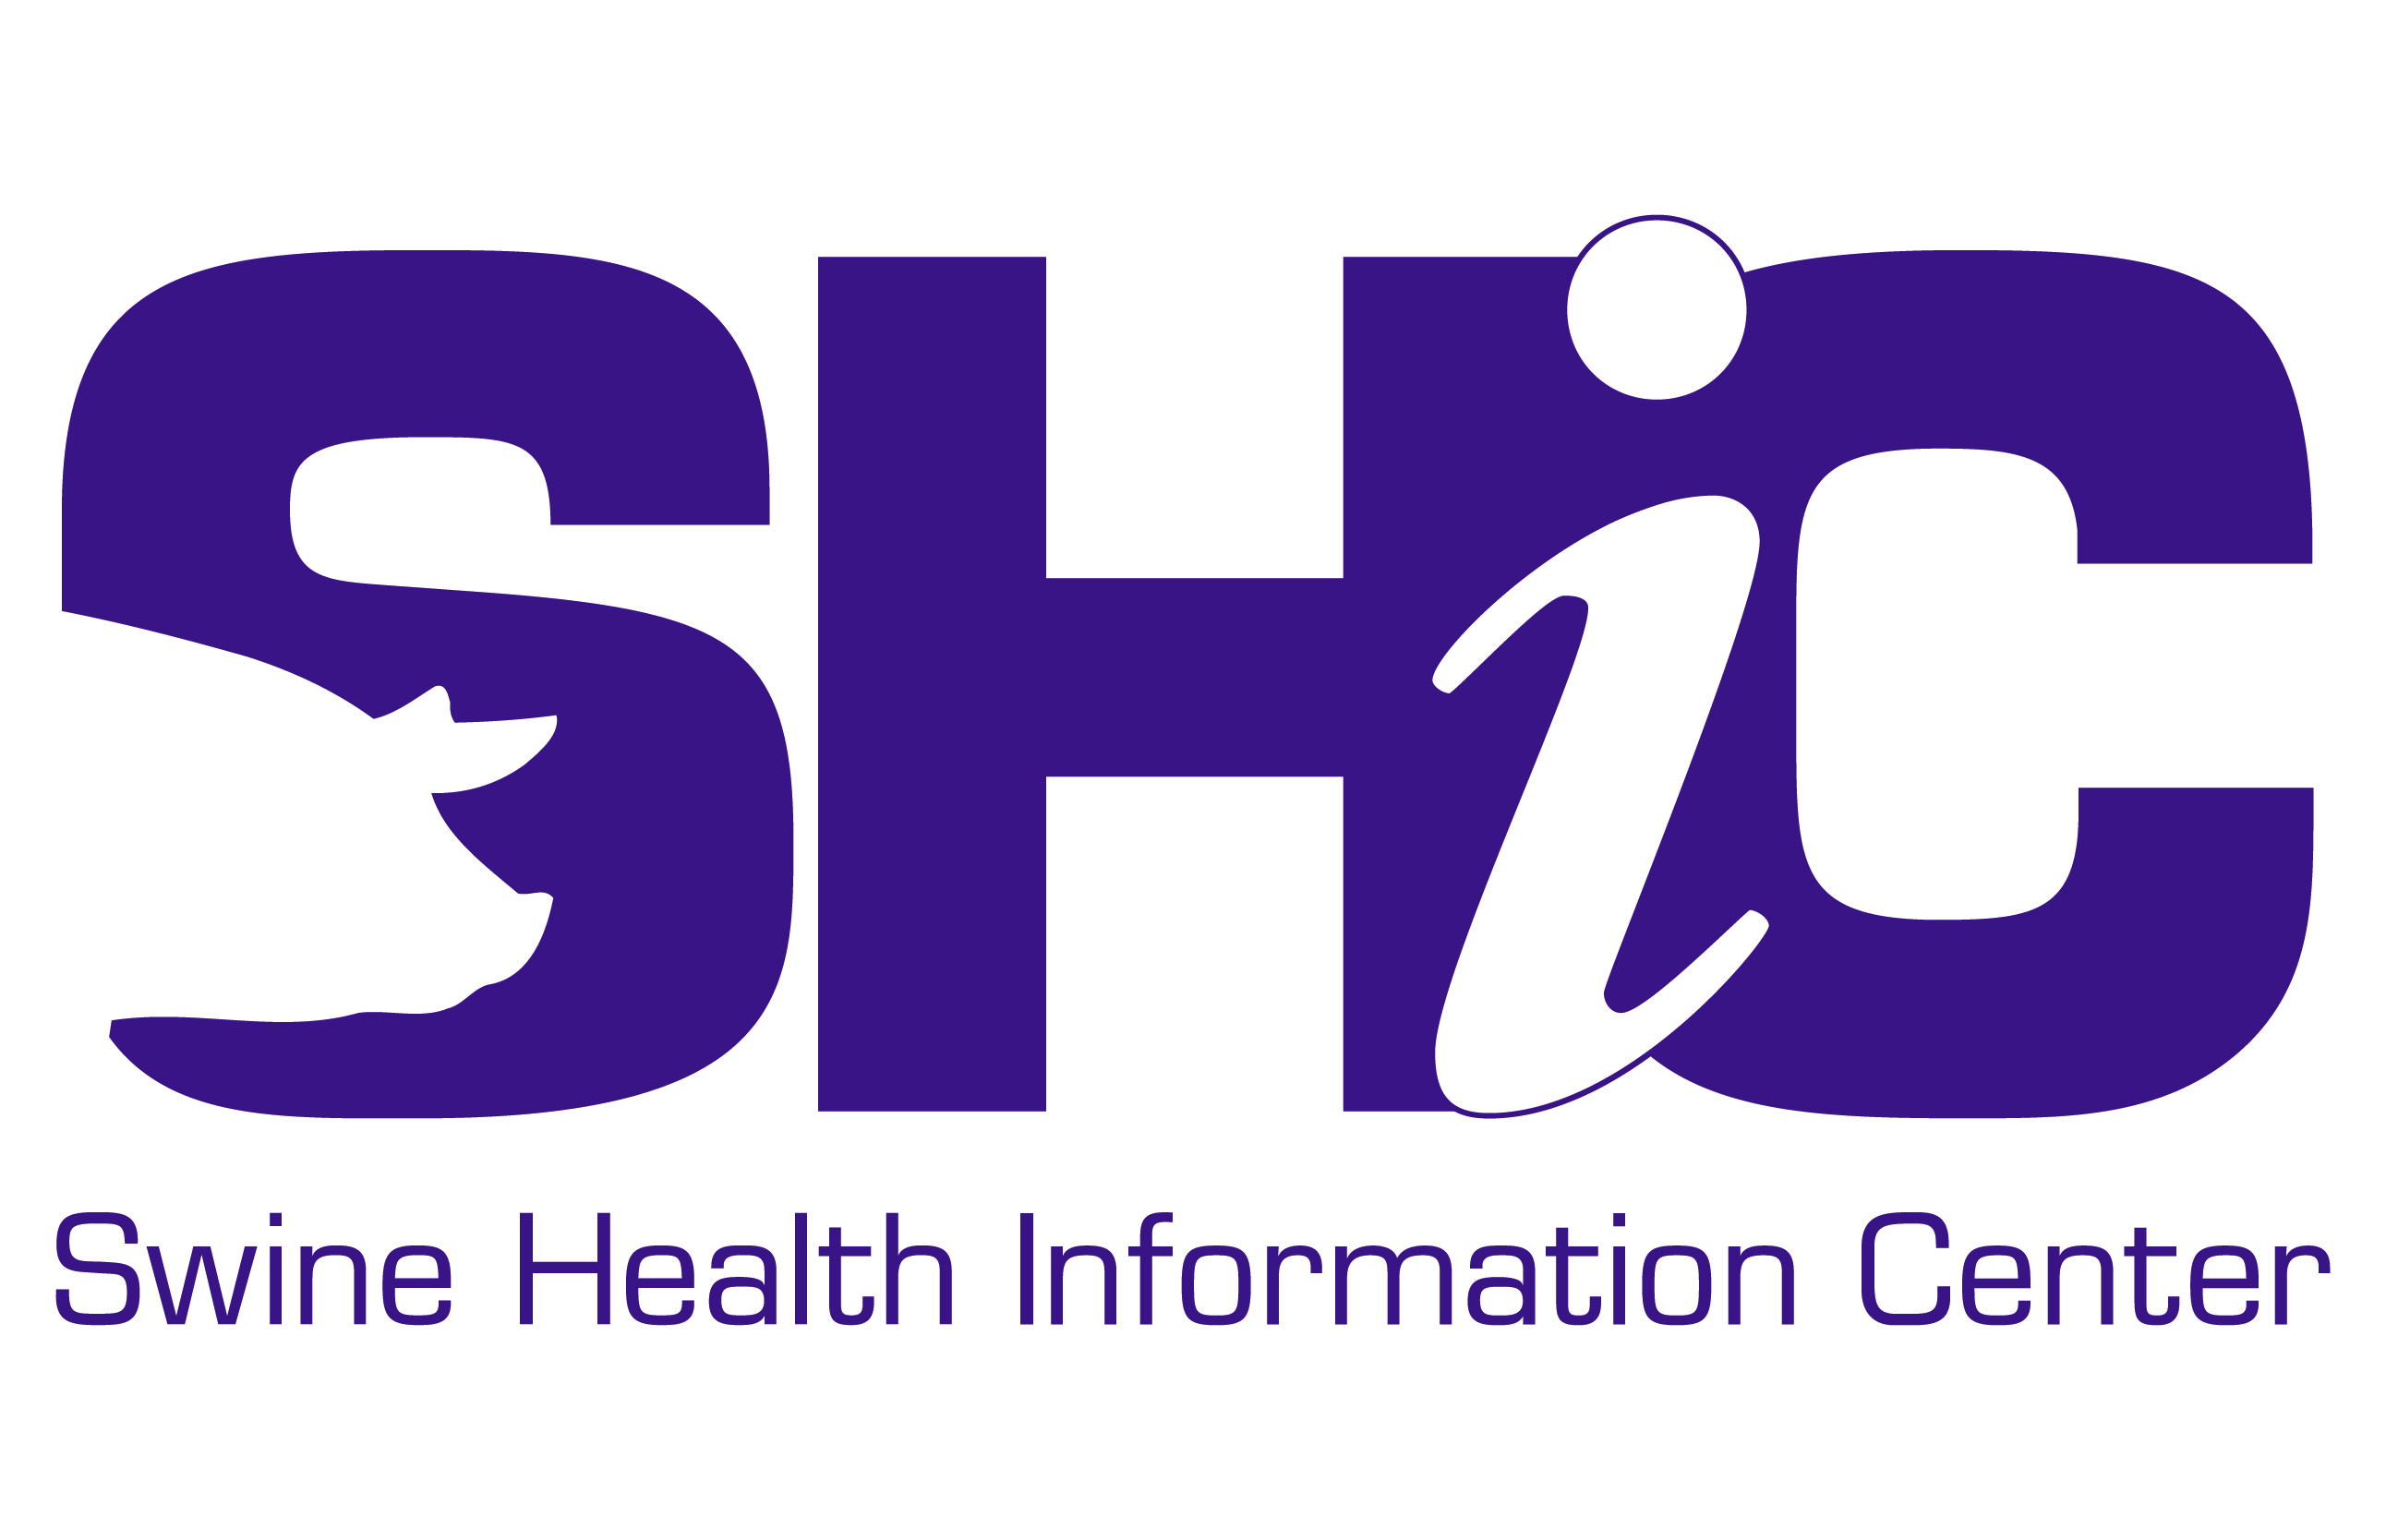 "SHiC Swine Health Information Center" in purple text